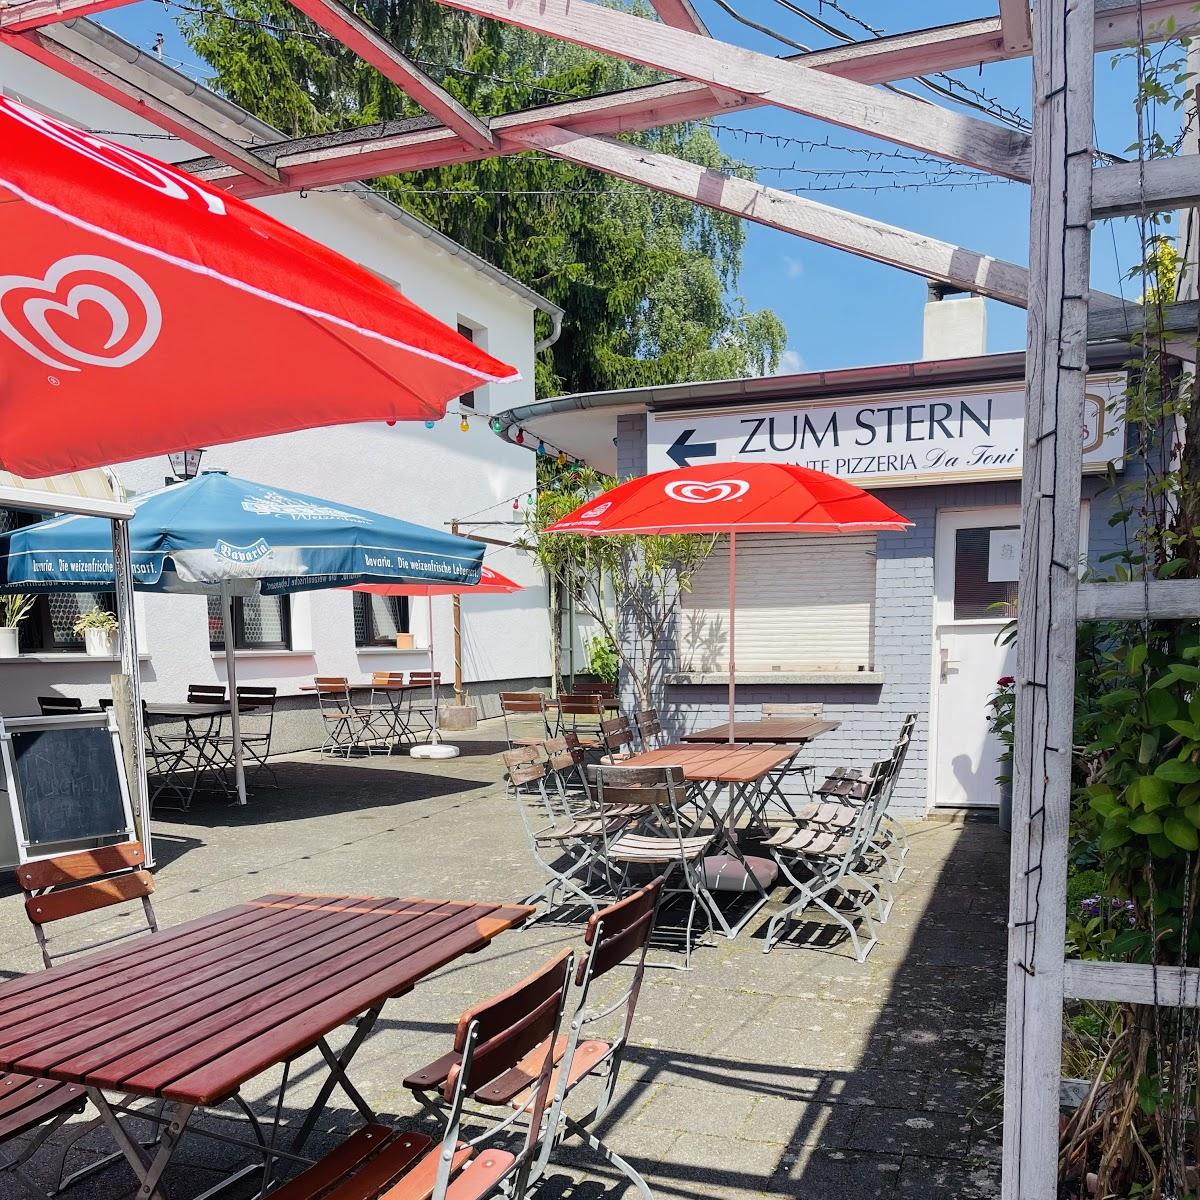 Restaurant "Zum Stern Da Toni" in Babenhausen